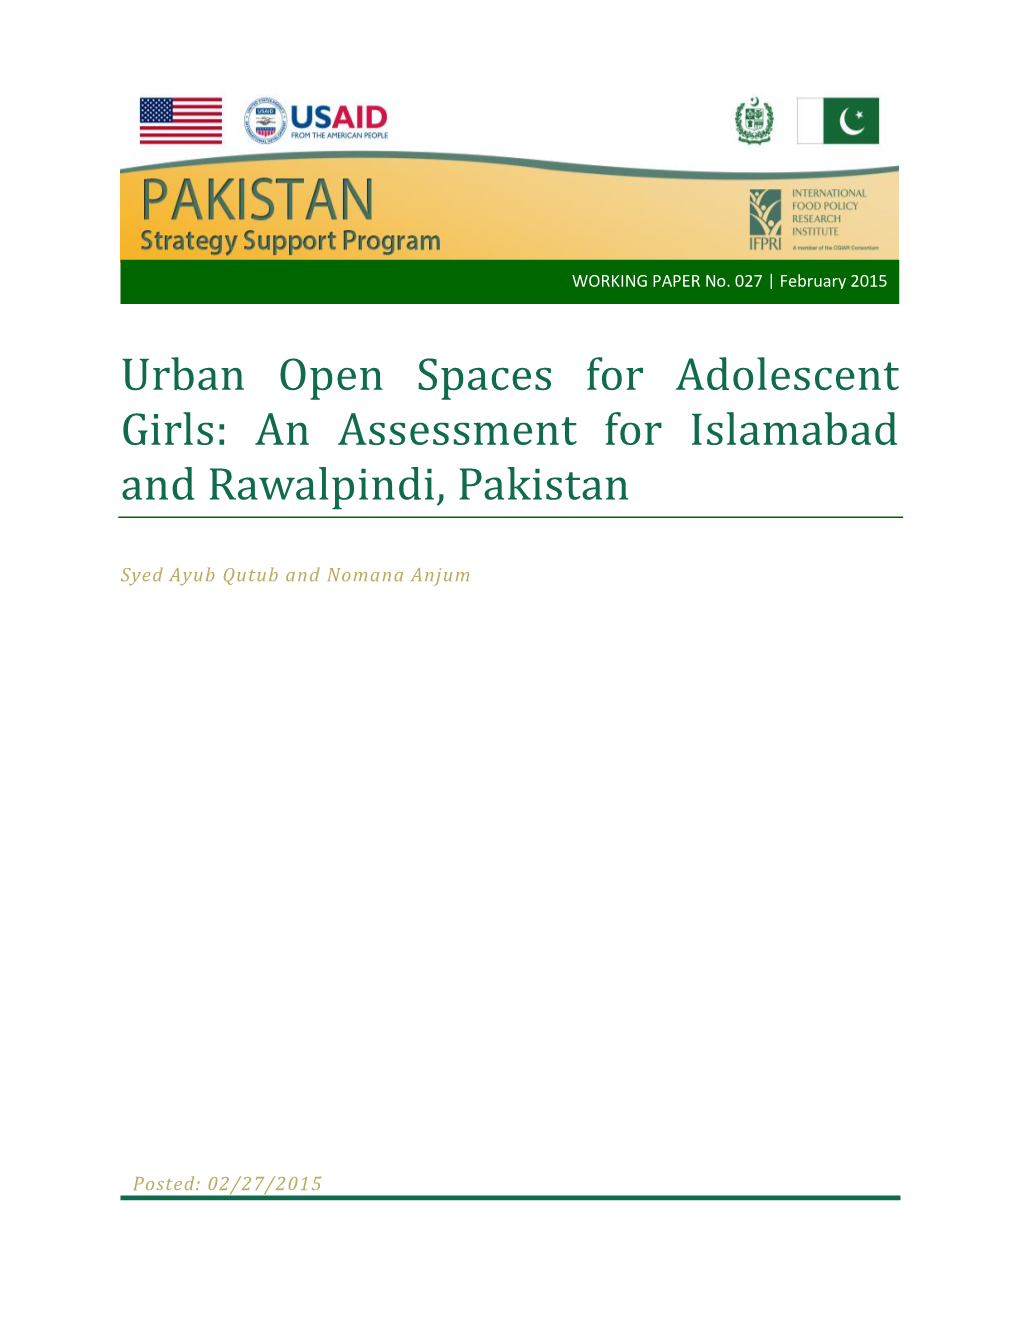 An Assessment for Islamabad and Rawalpindi, Pakistan